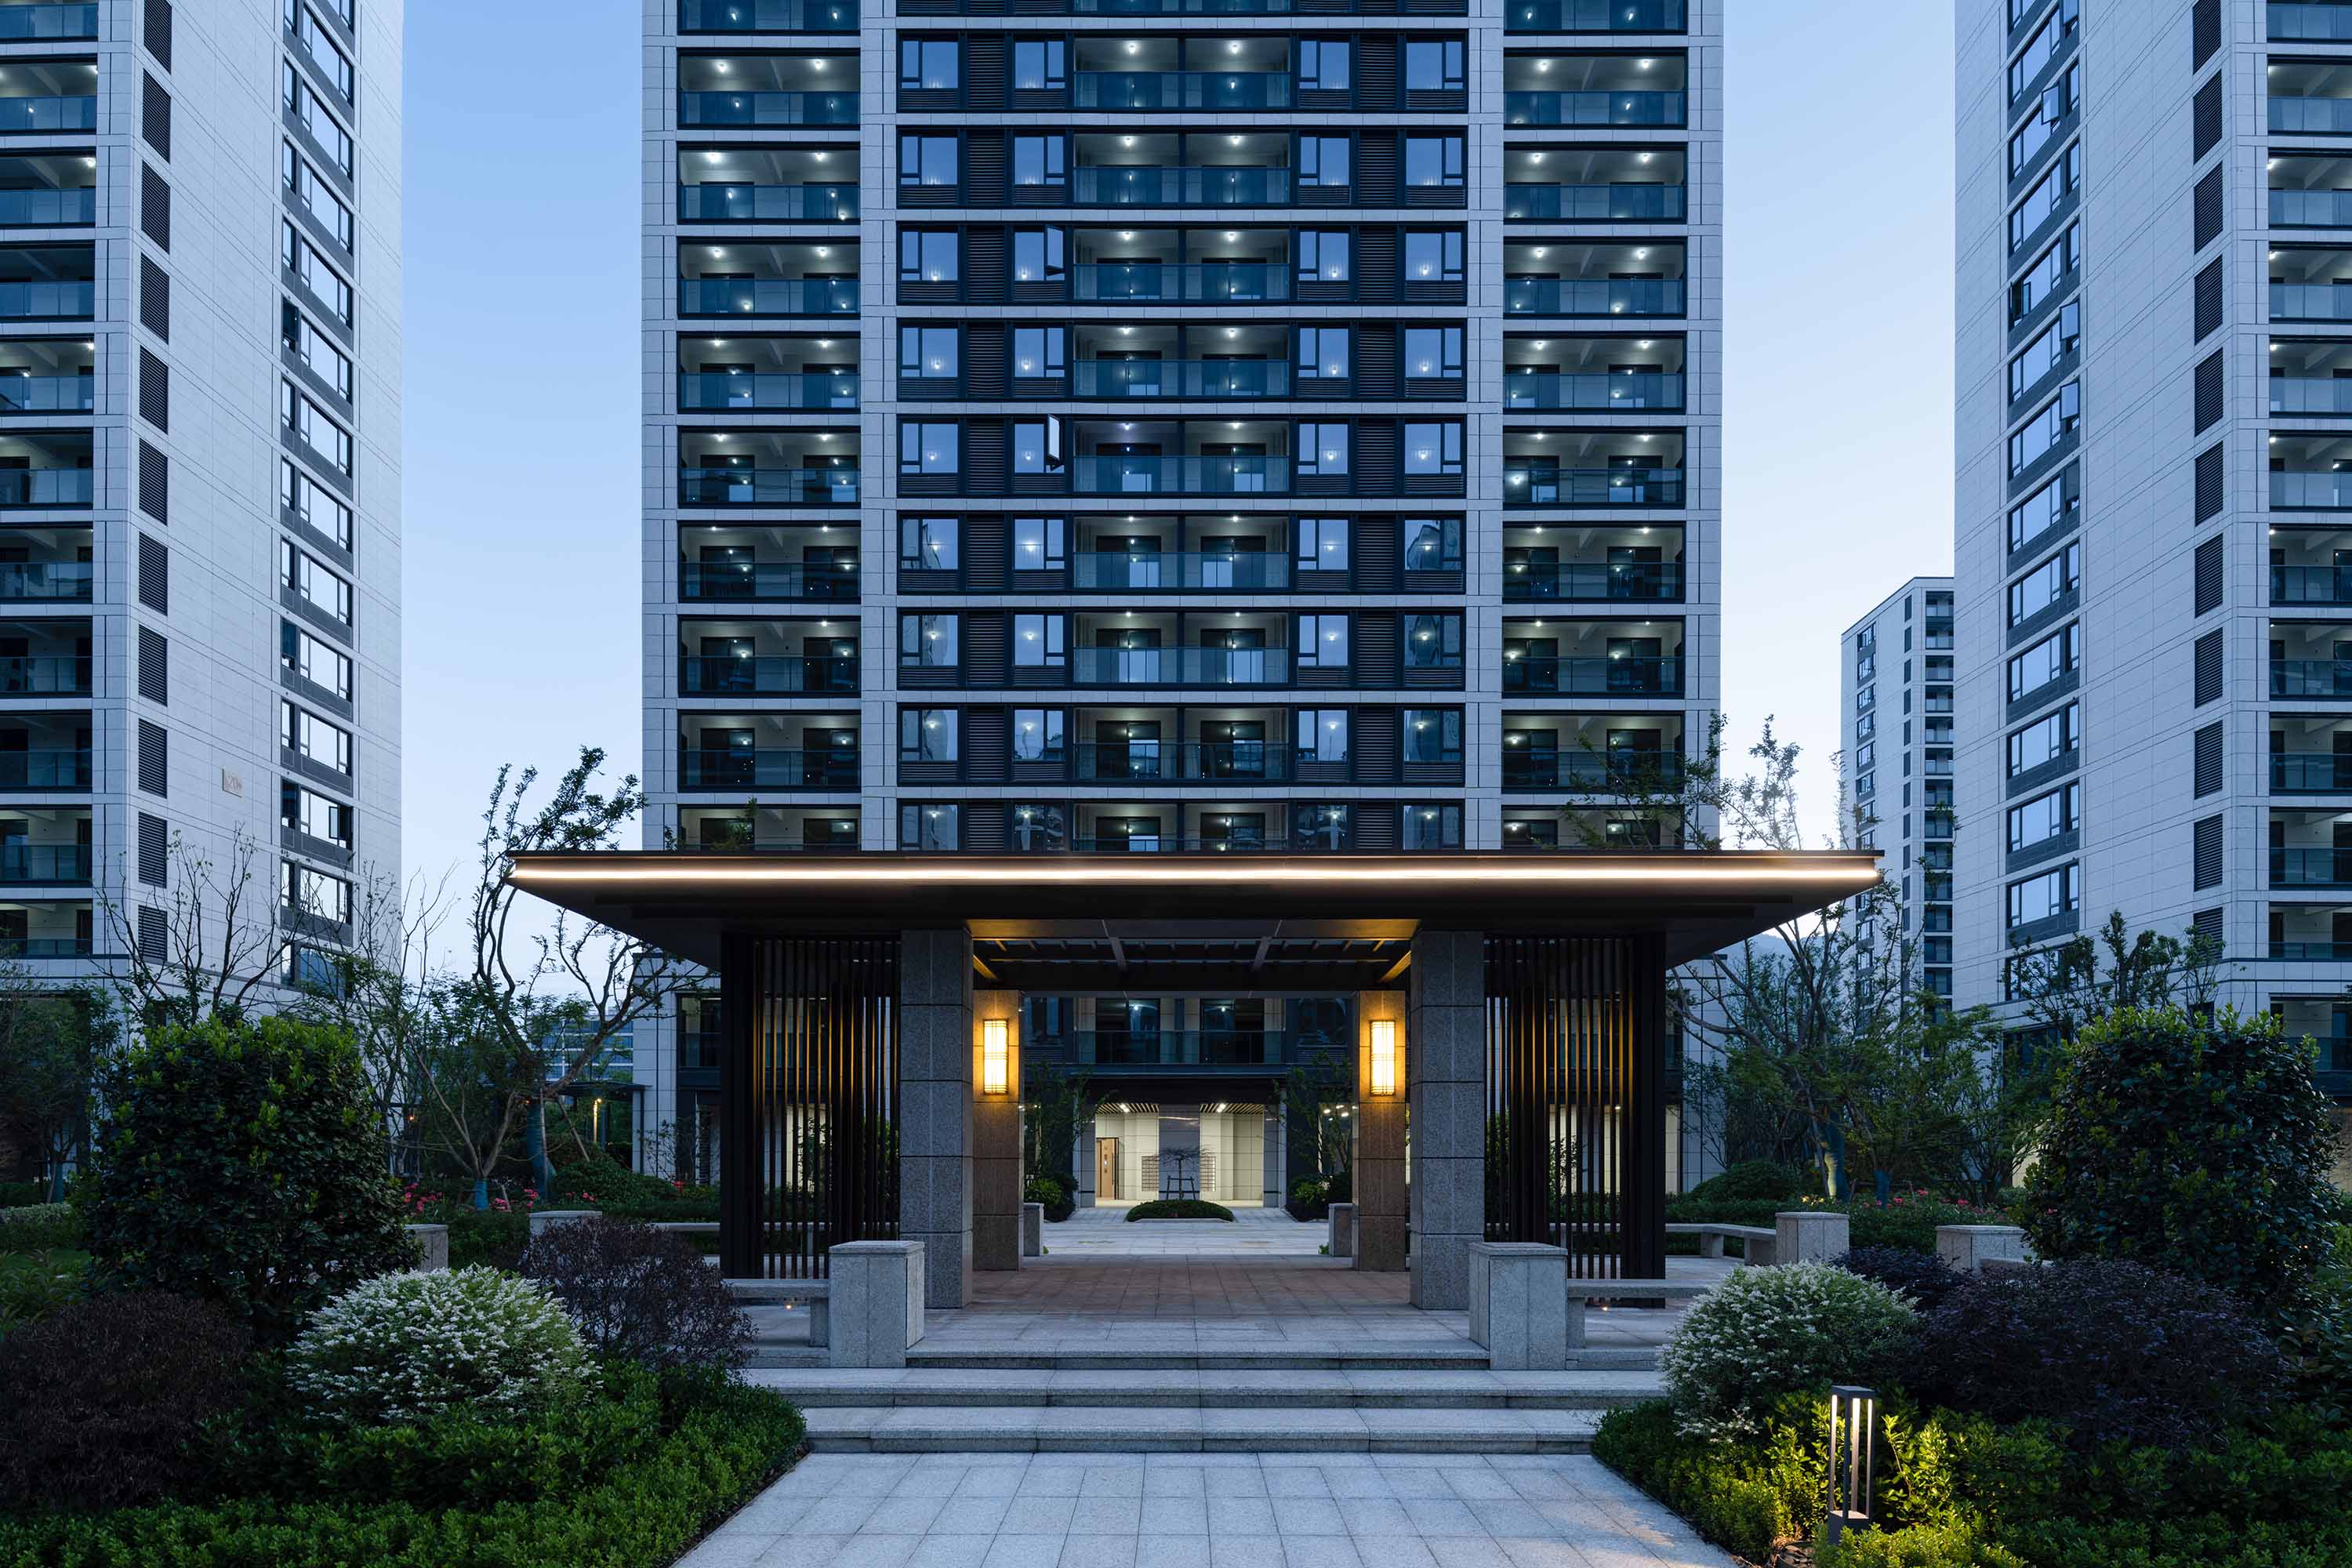 丽水金周农居新社区 | 蓝城蓝鸿设计<br/>  Jinzhou New Community of Residence in Lishui | Bluetown Lanhong Design